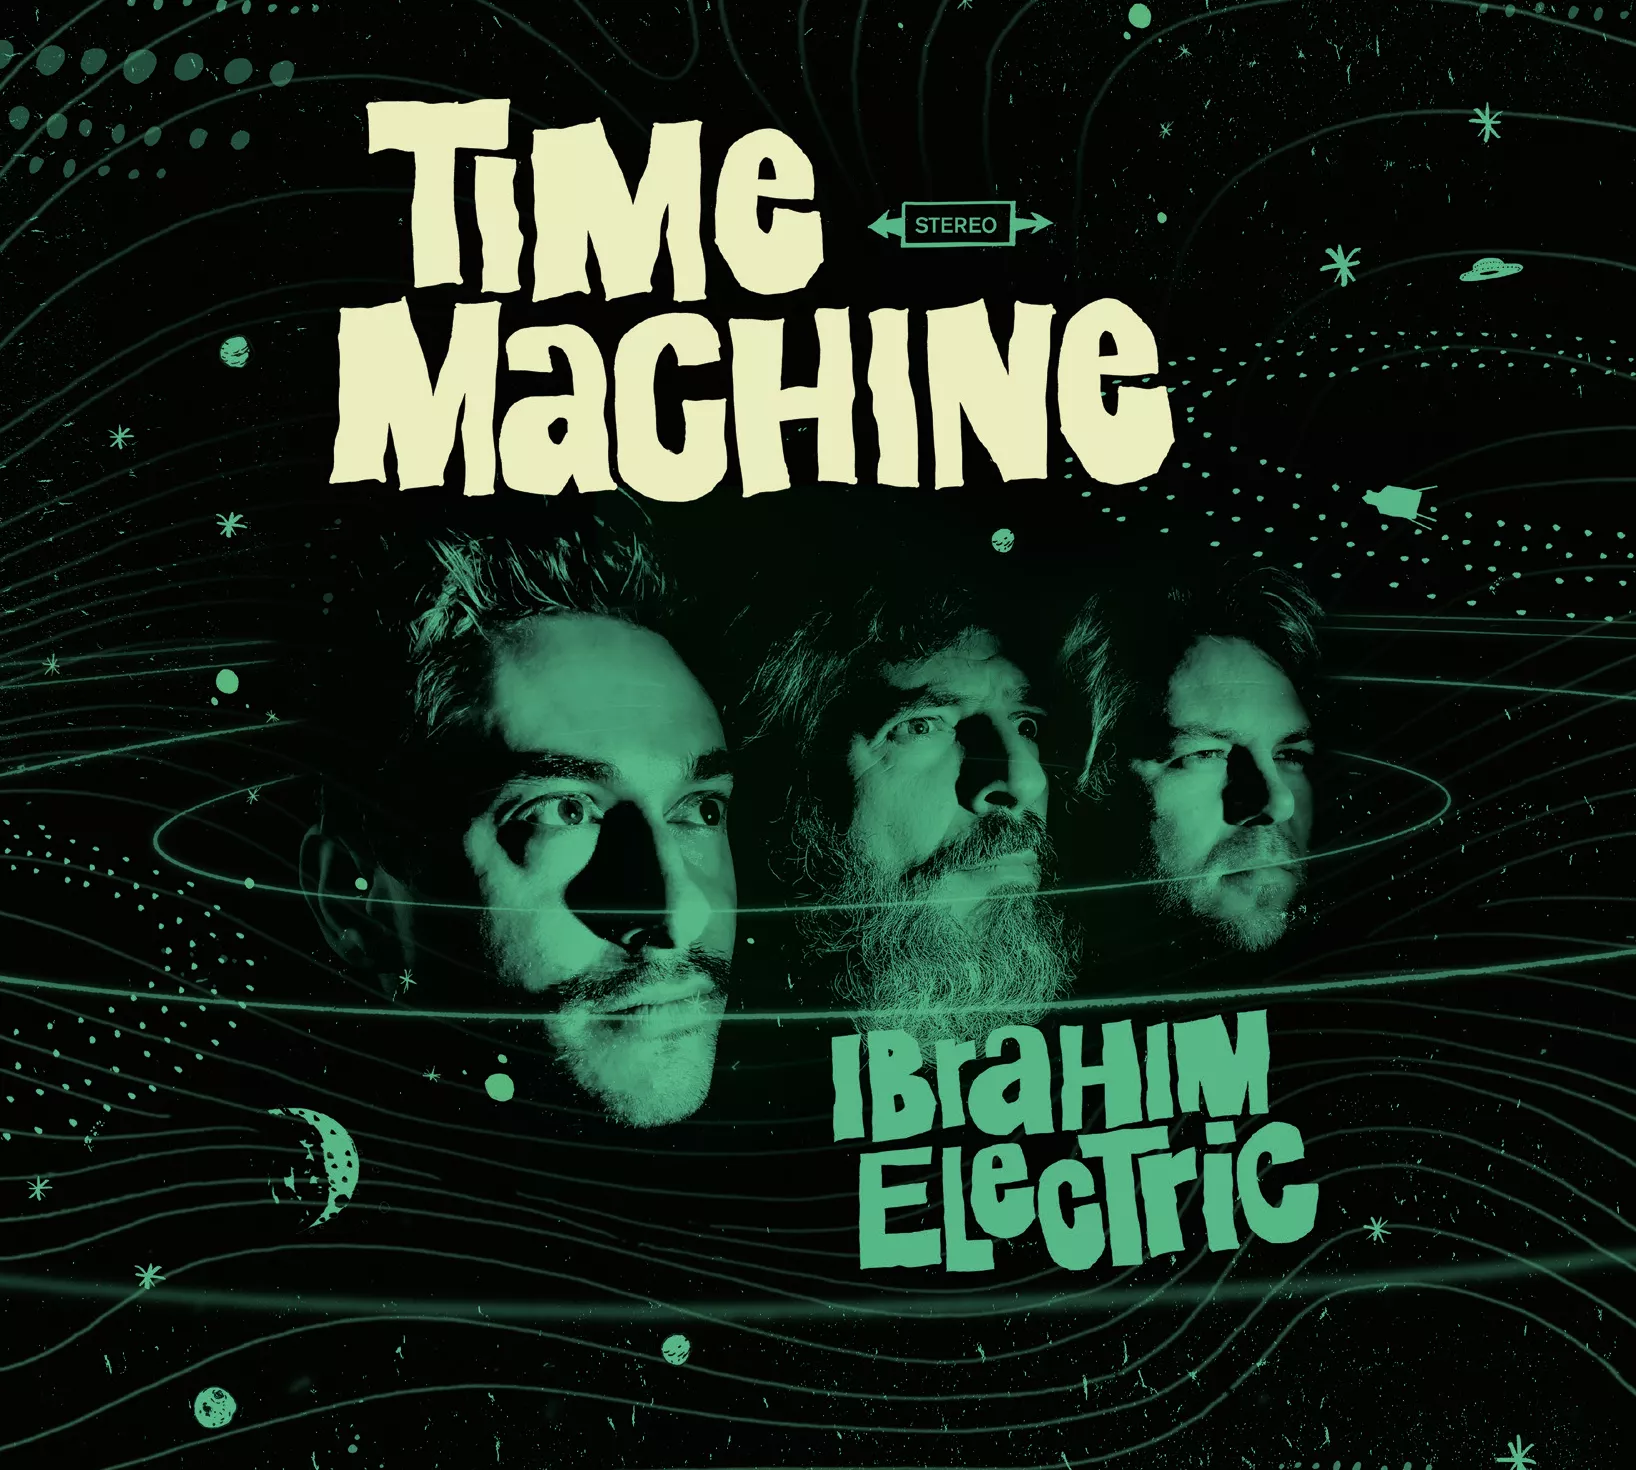 Time Machine - Ibrahim Electric